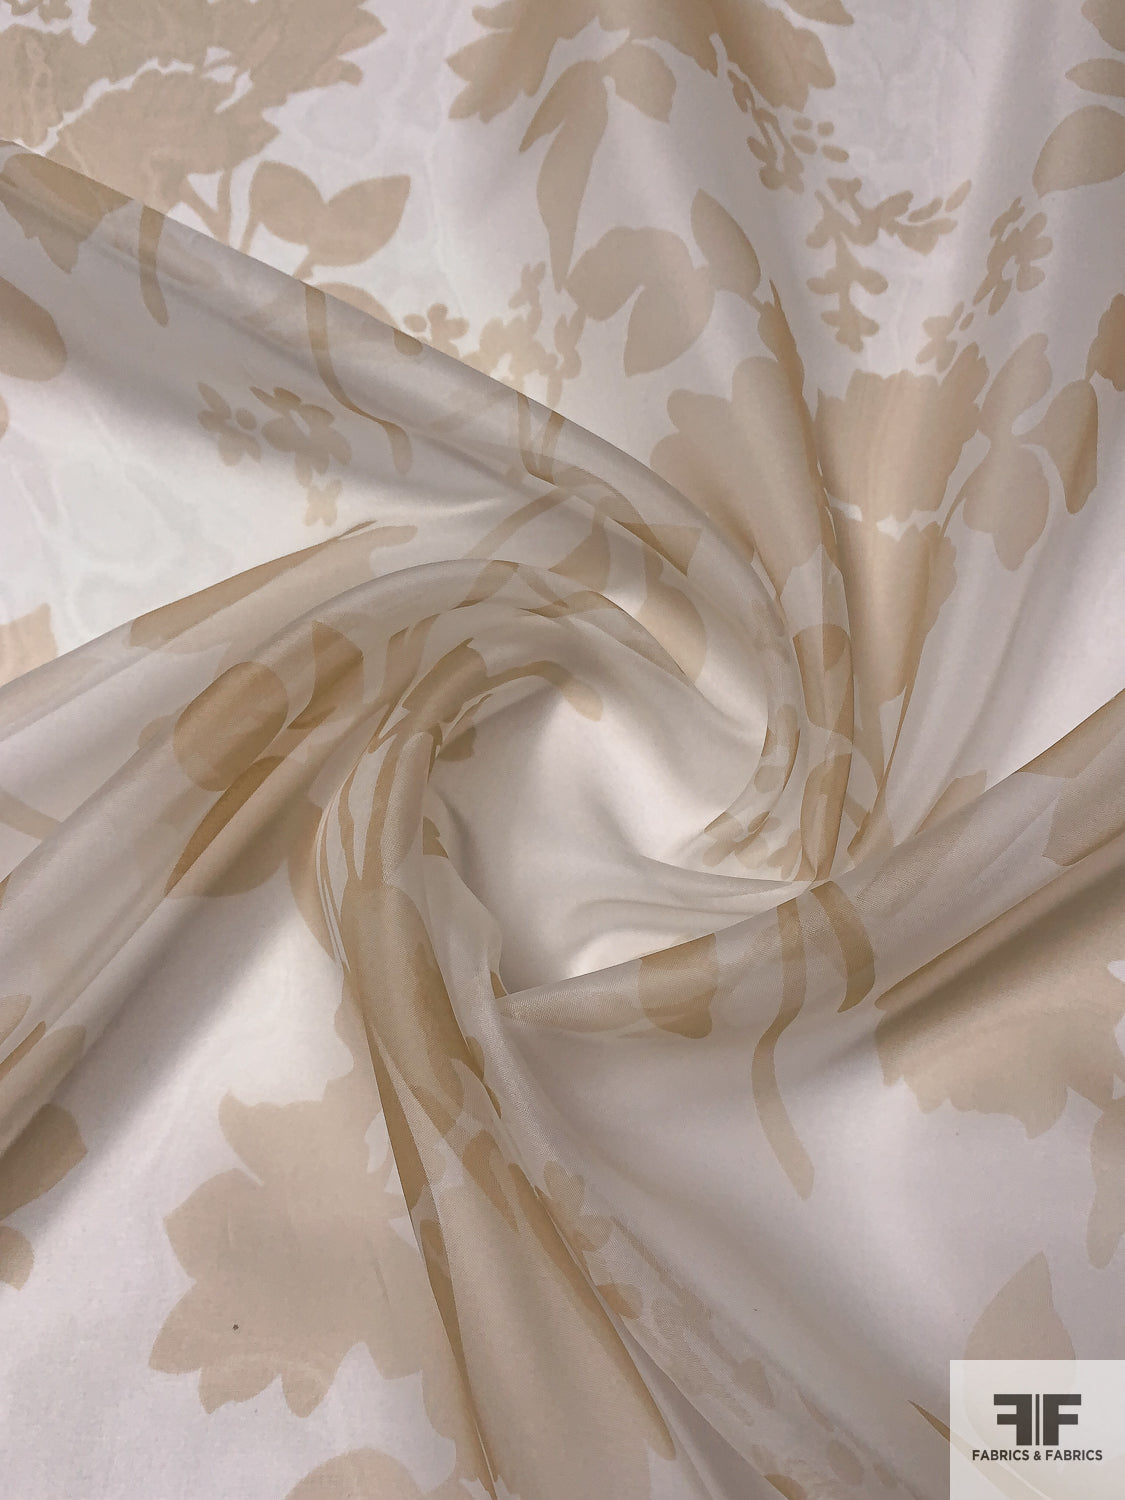 Floral Silhouette Printed Silk Organza - Tan / Off-White